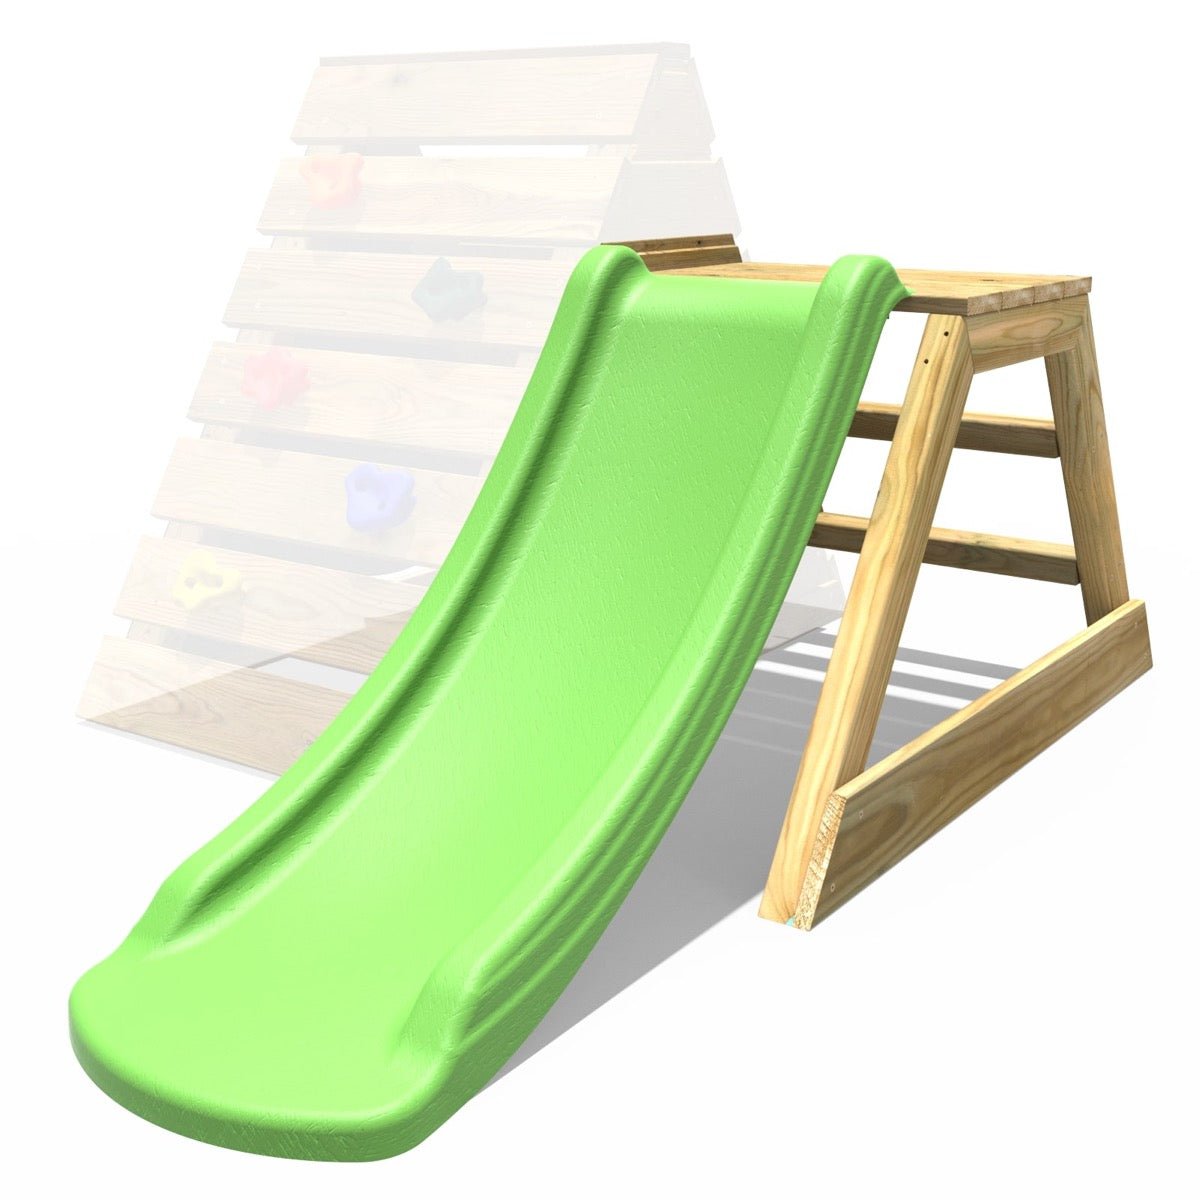 Rebo Mini wooden climbing Pyramid Add on Slide platform with Green Slide